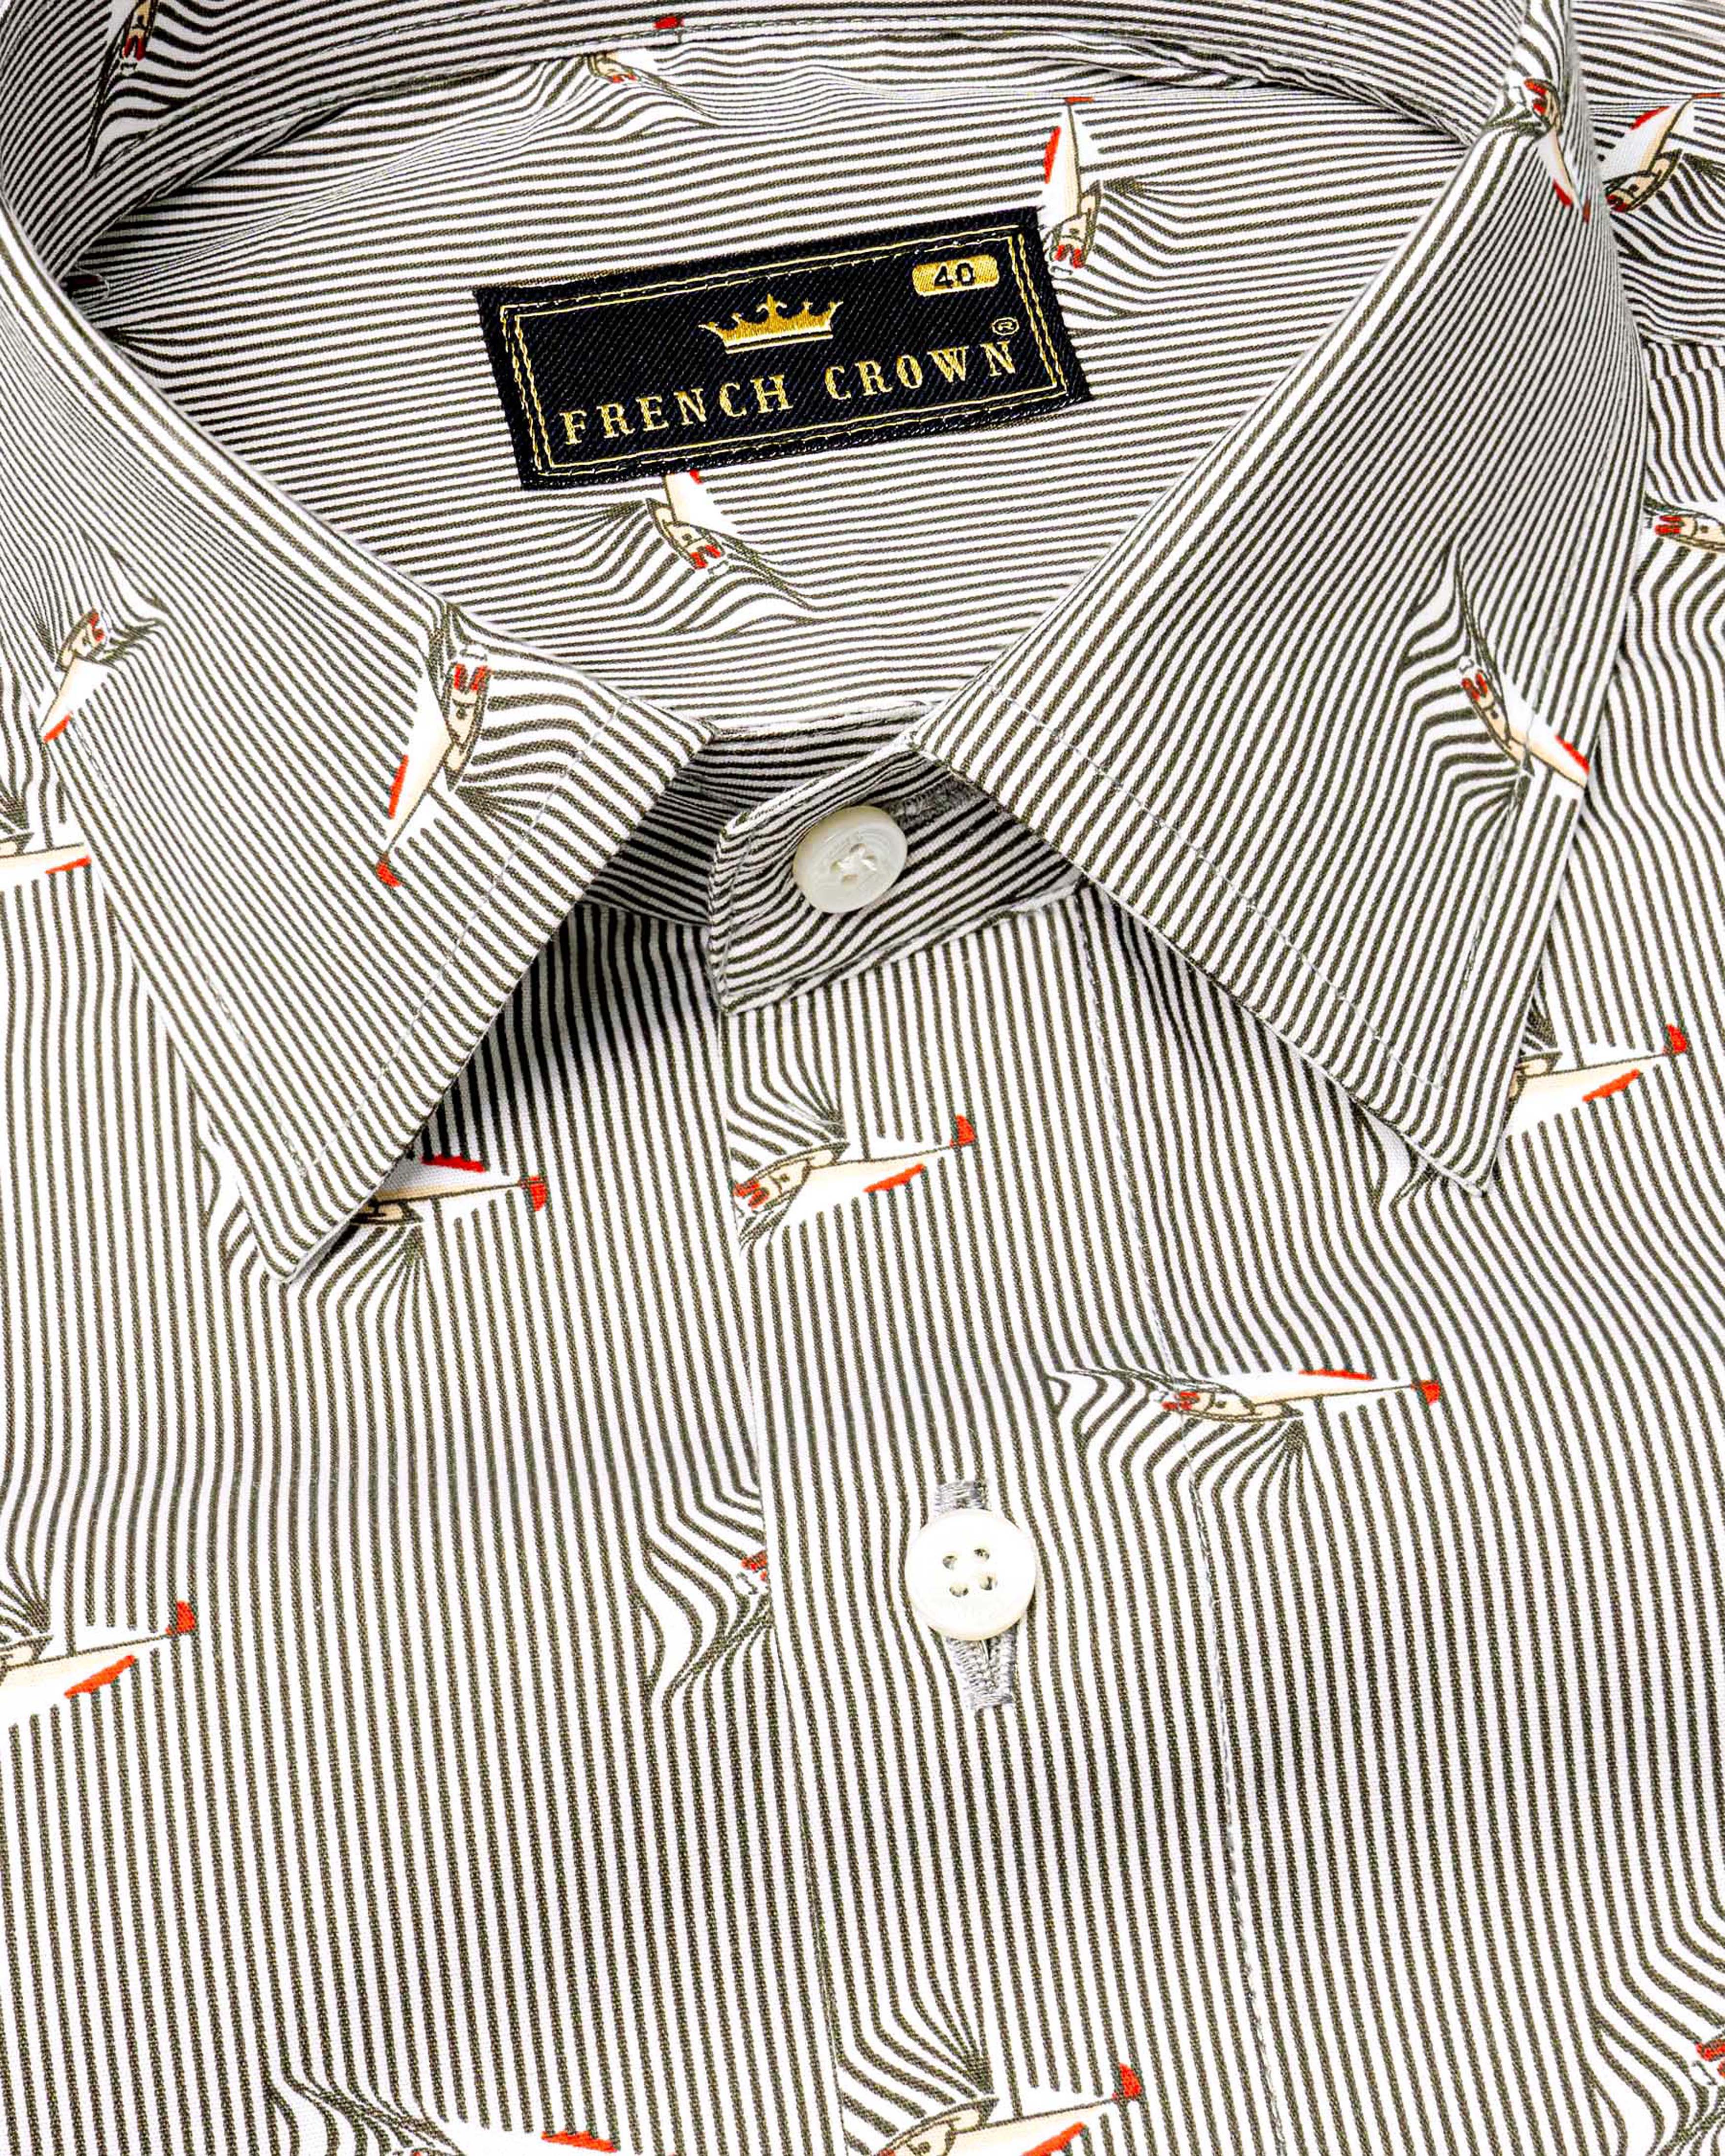 Ash Gray Octopus Printed Premium Cotton Designer Shirt